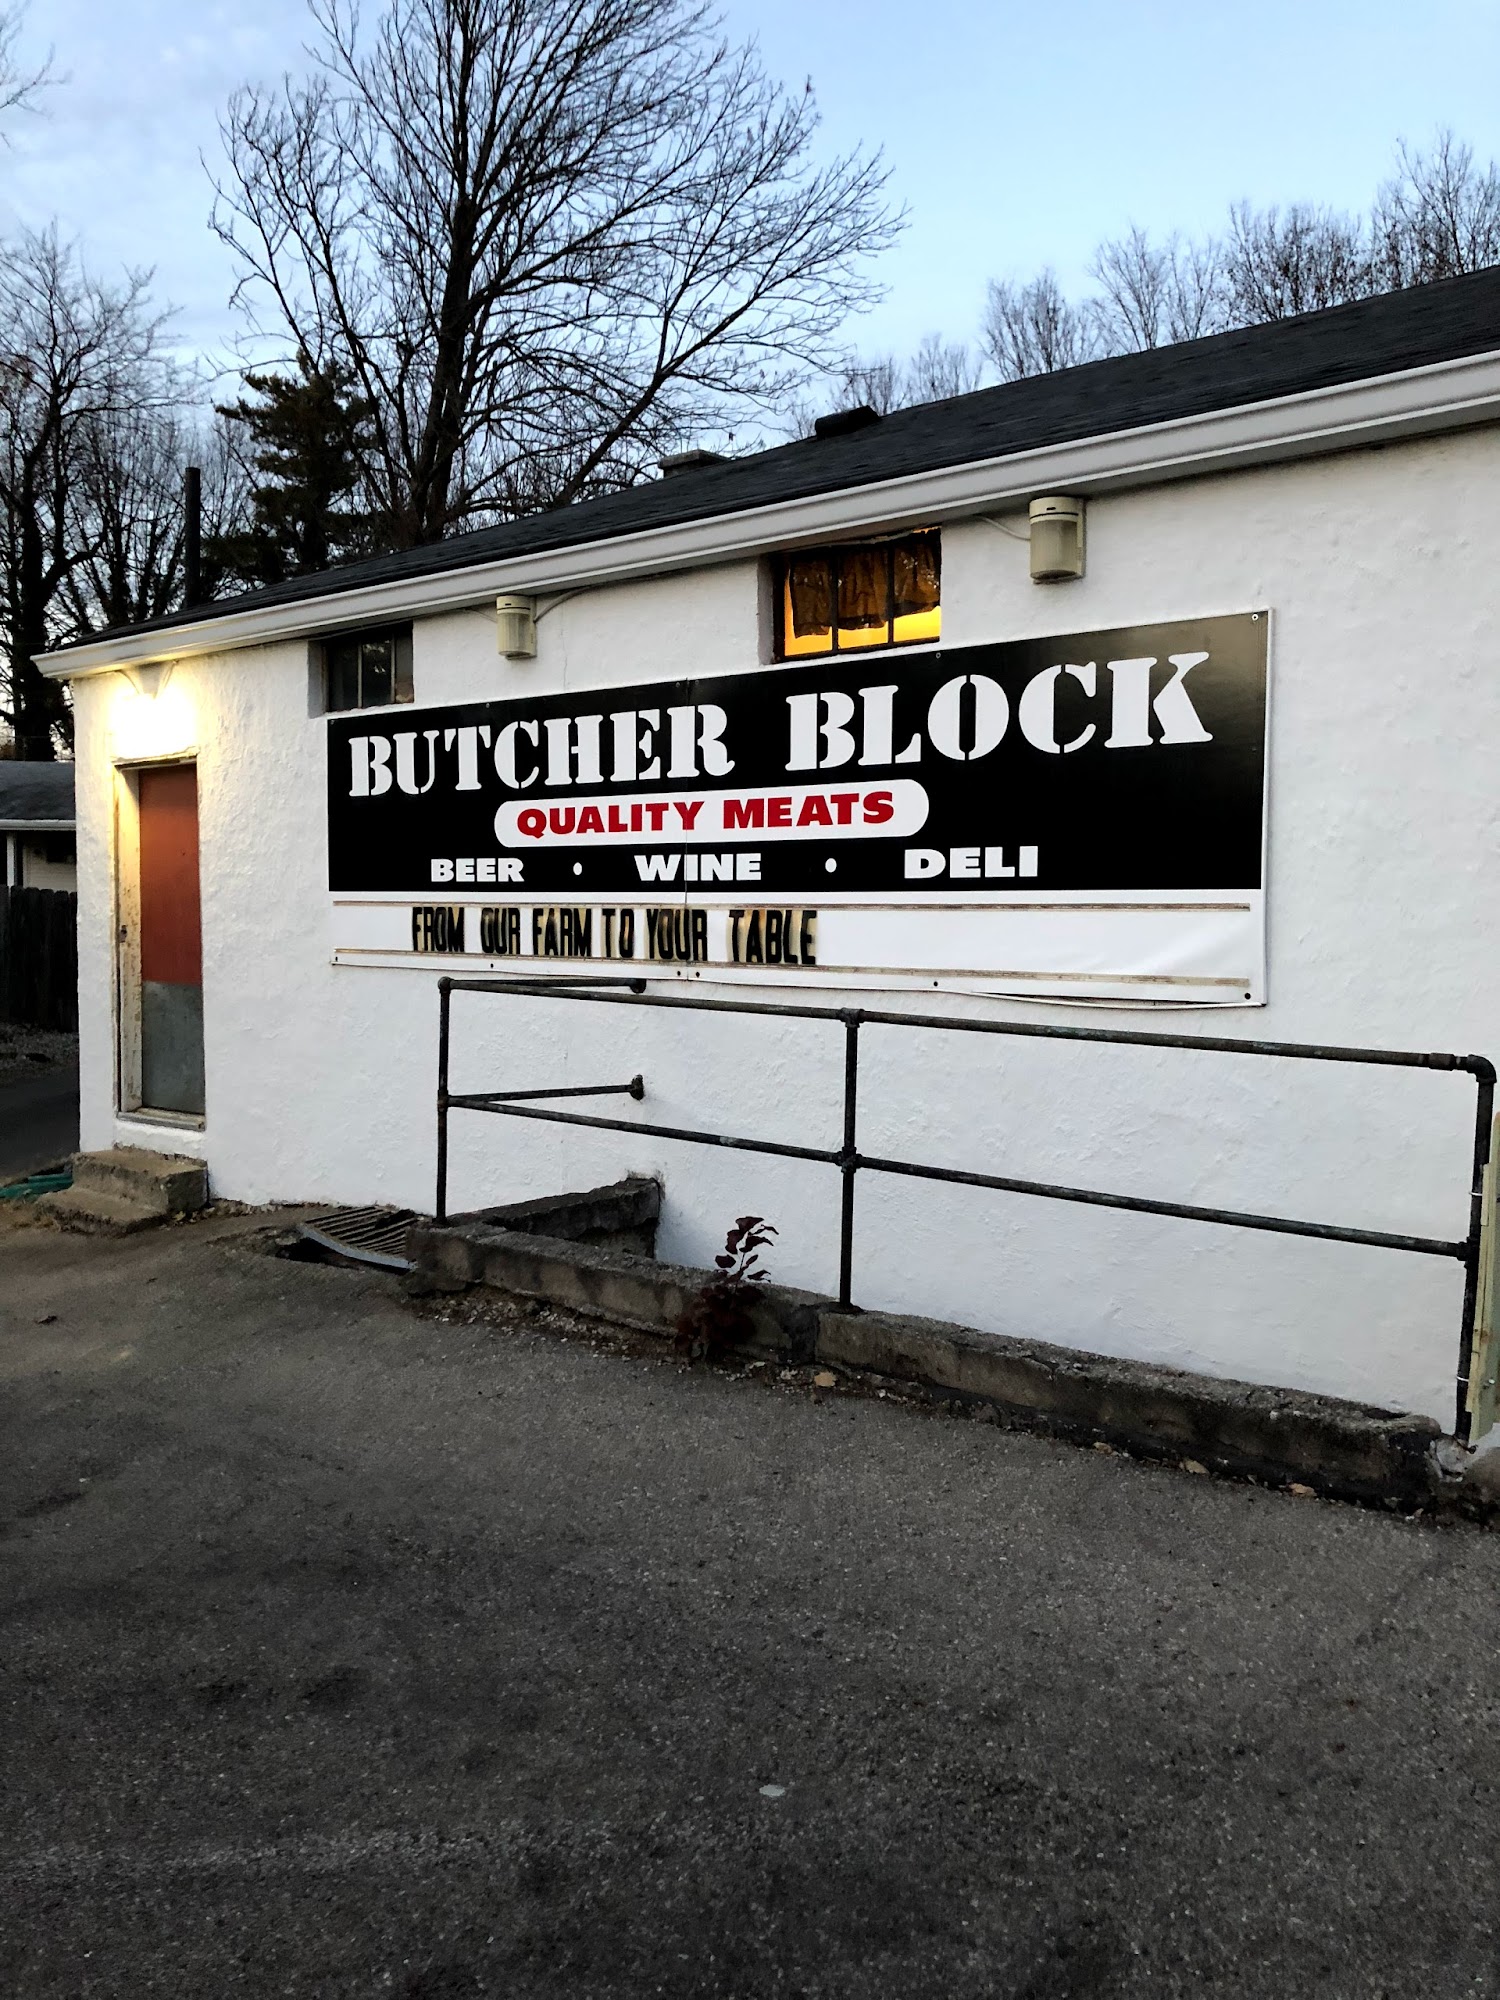 Keener Farm Butcher Block